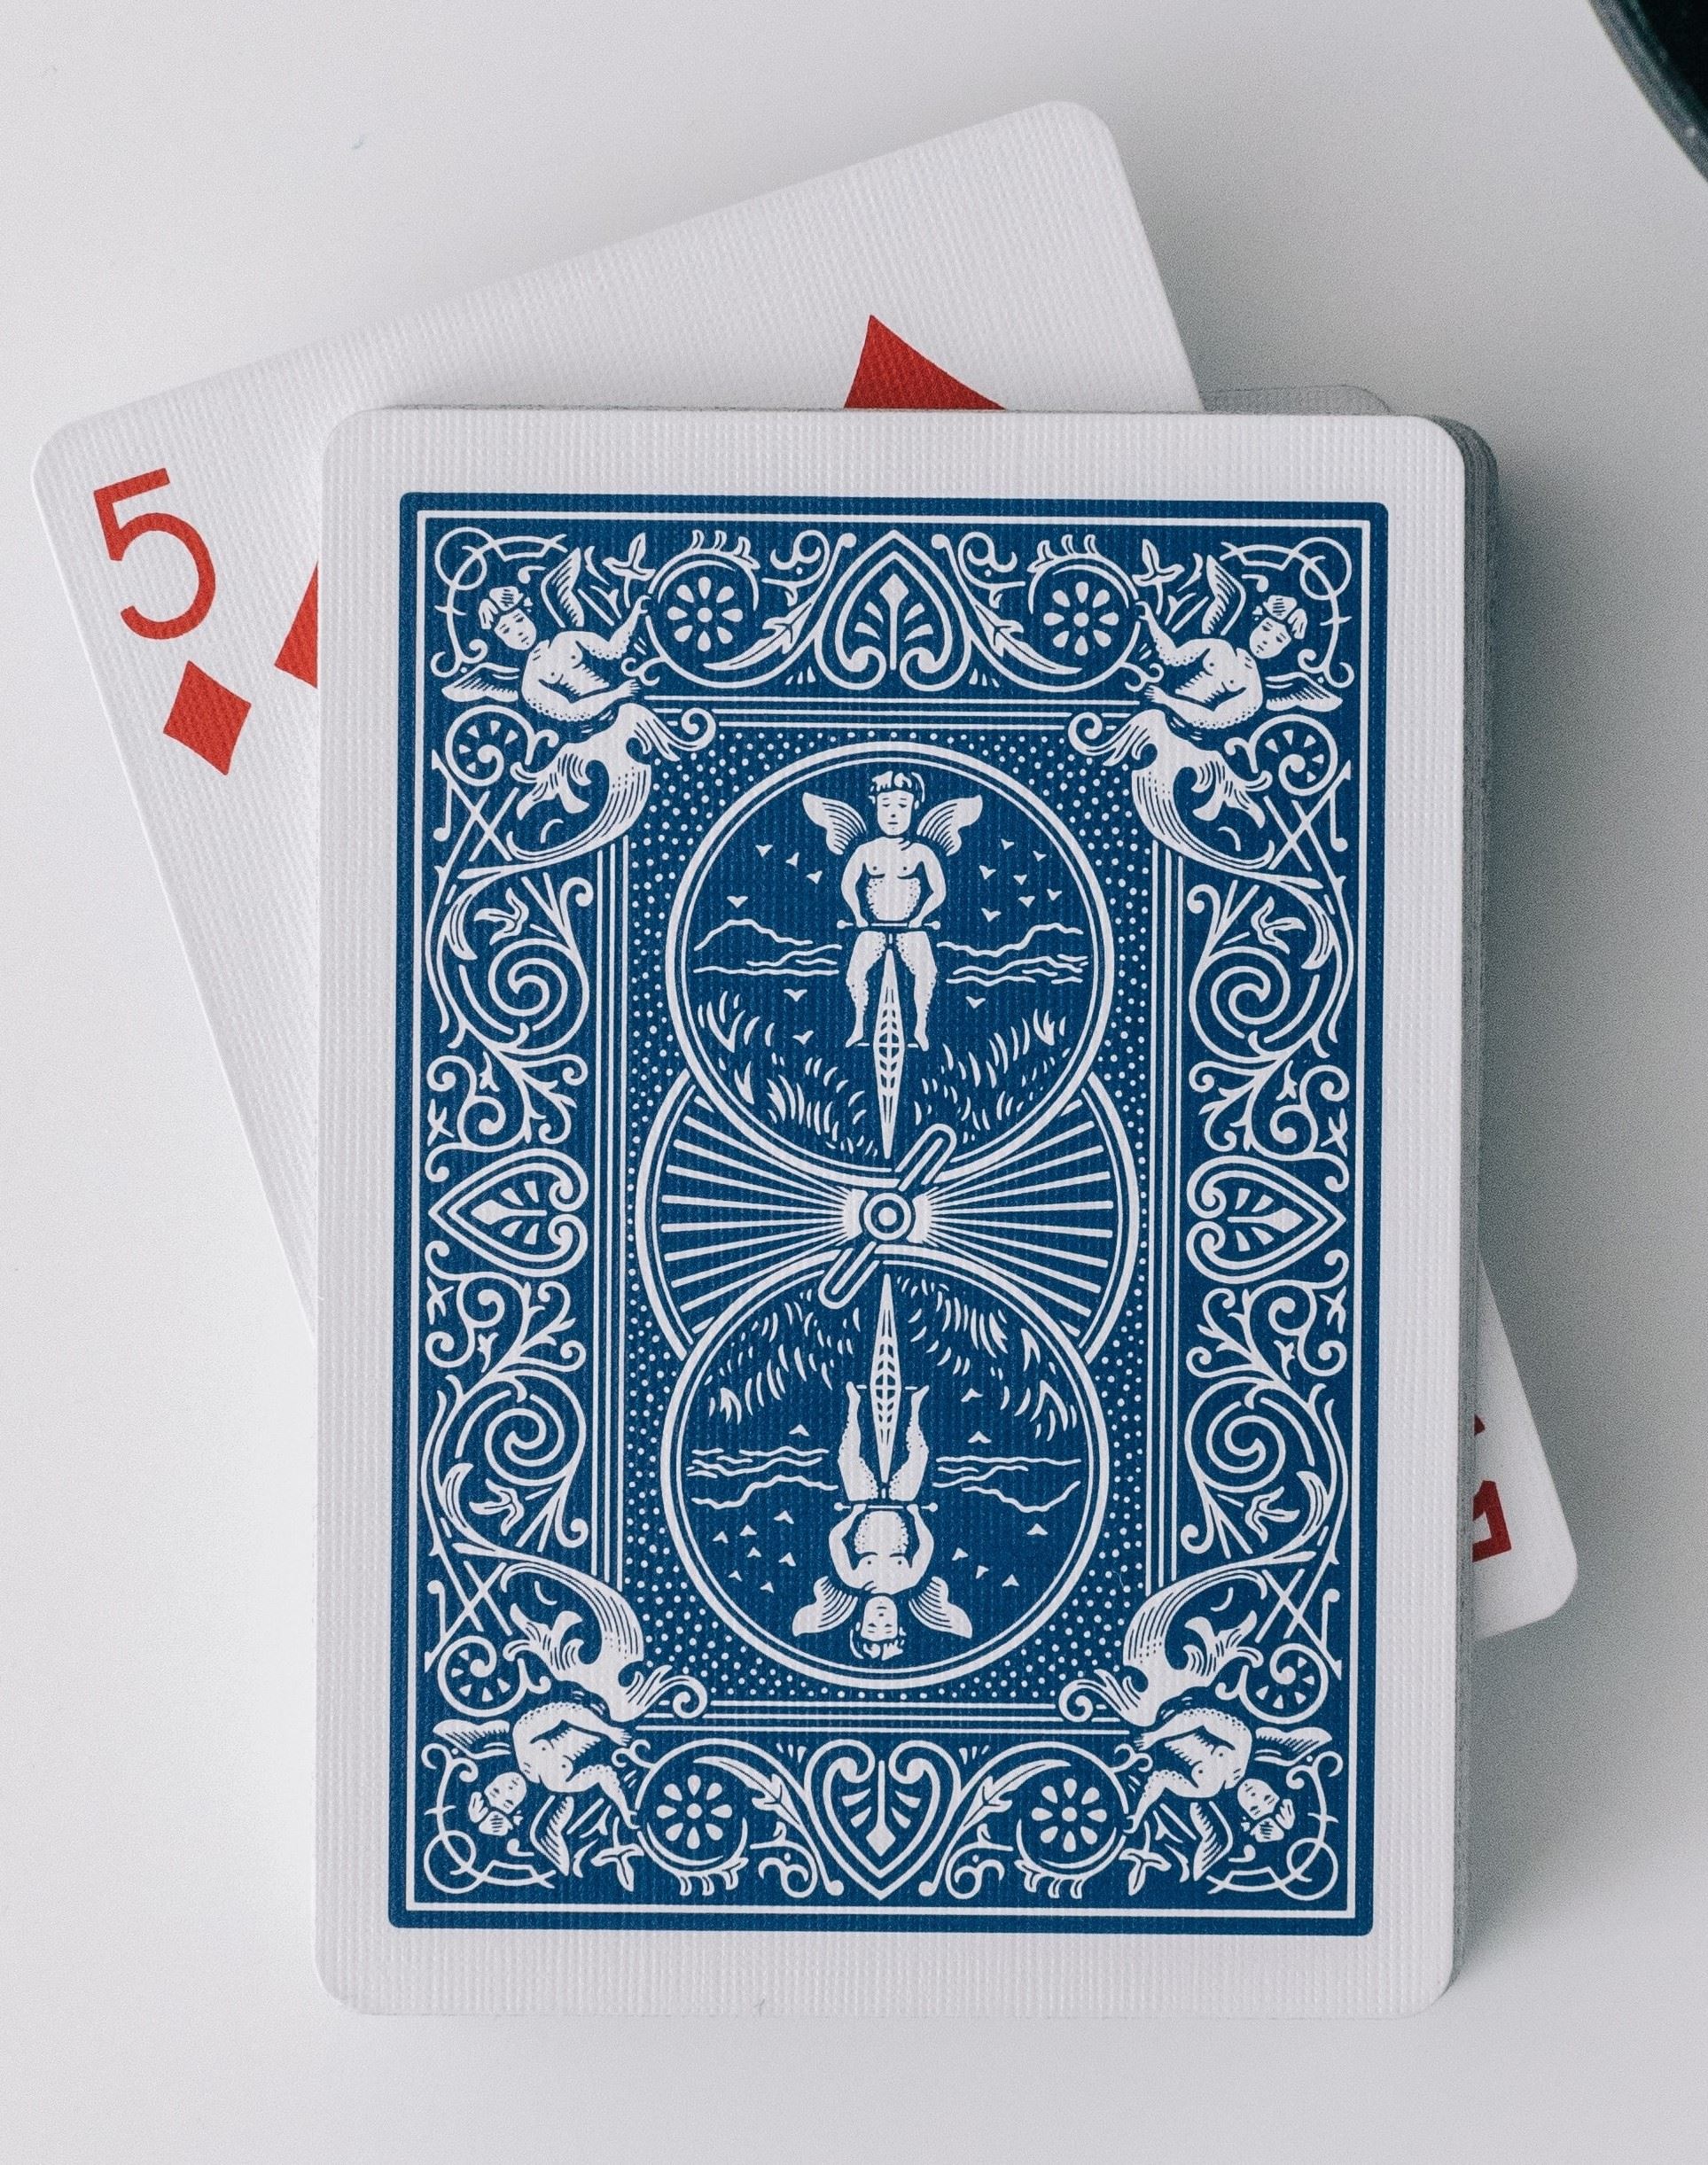 5-card-trumped1.jpg